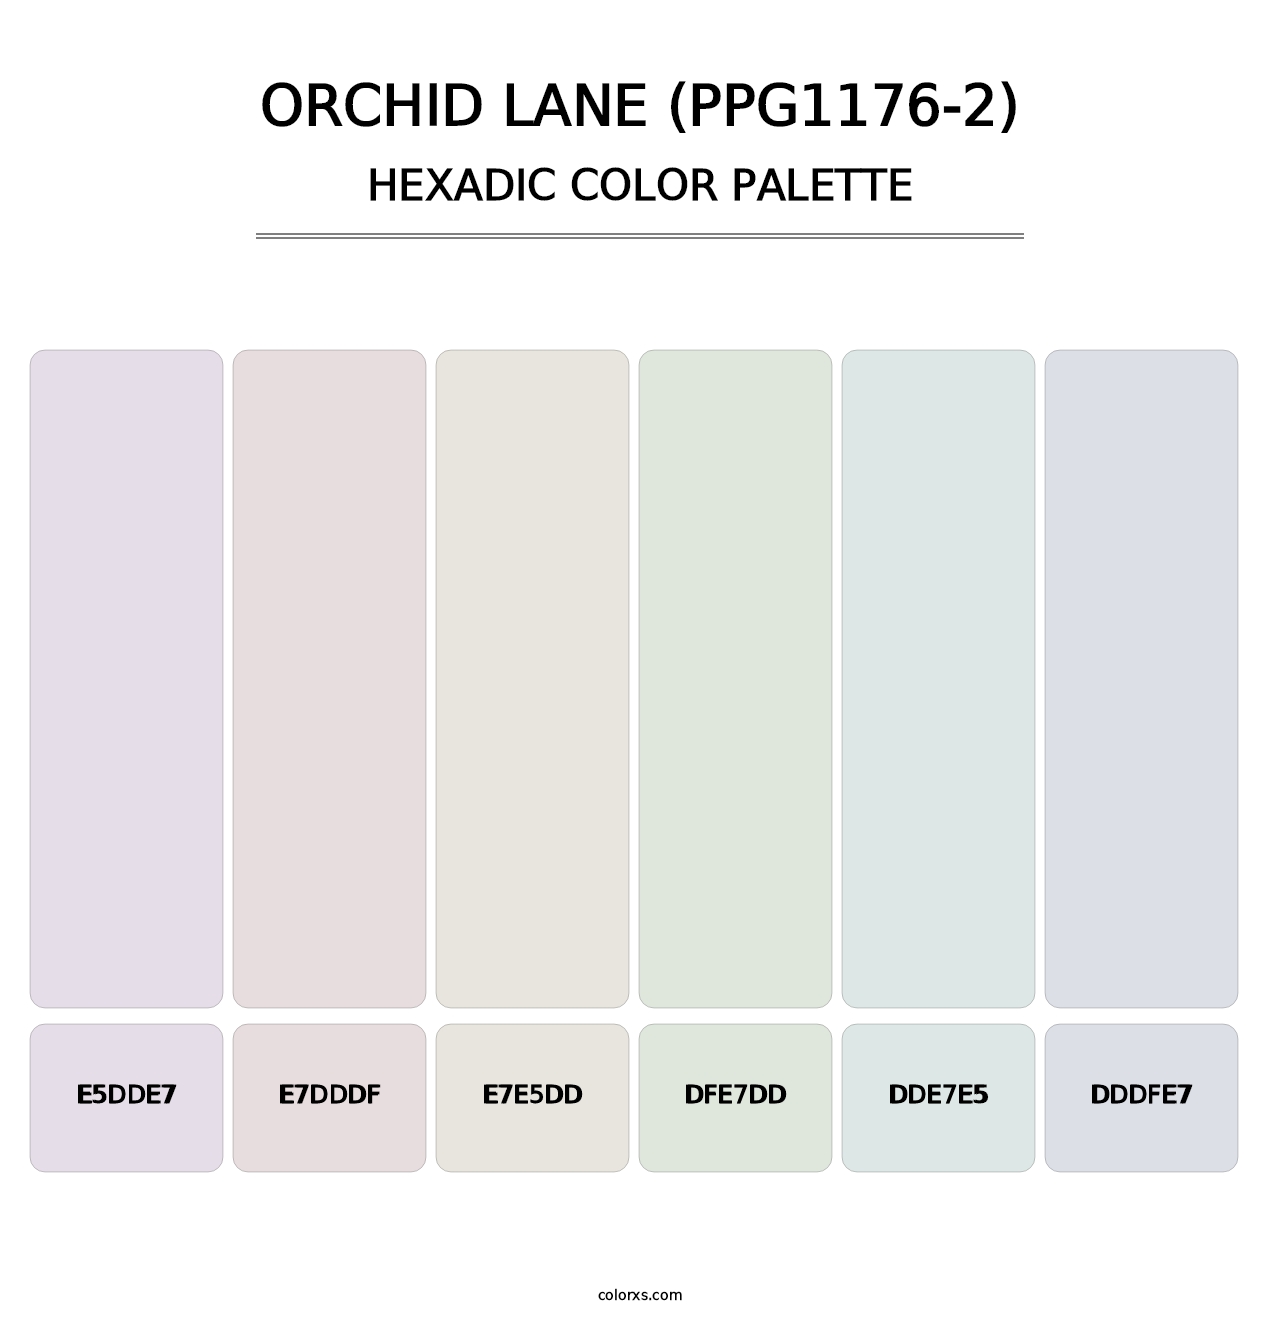 Orchid Lane (PPG1176-2) - Hexadic Color Palette